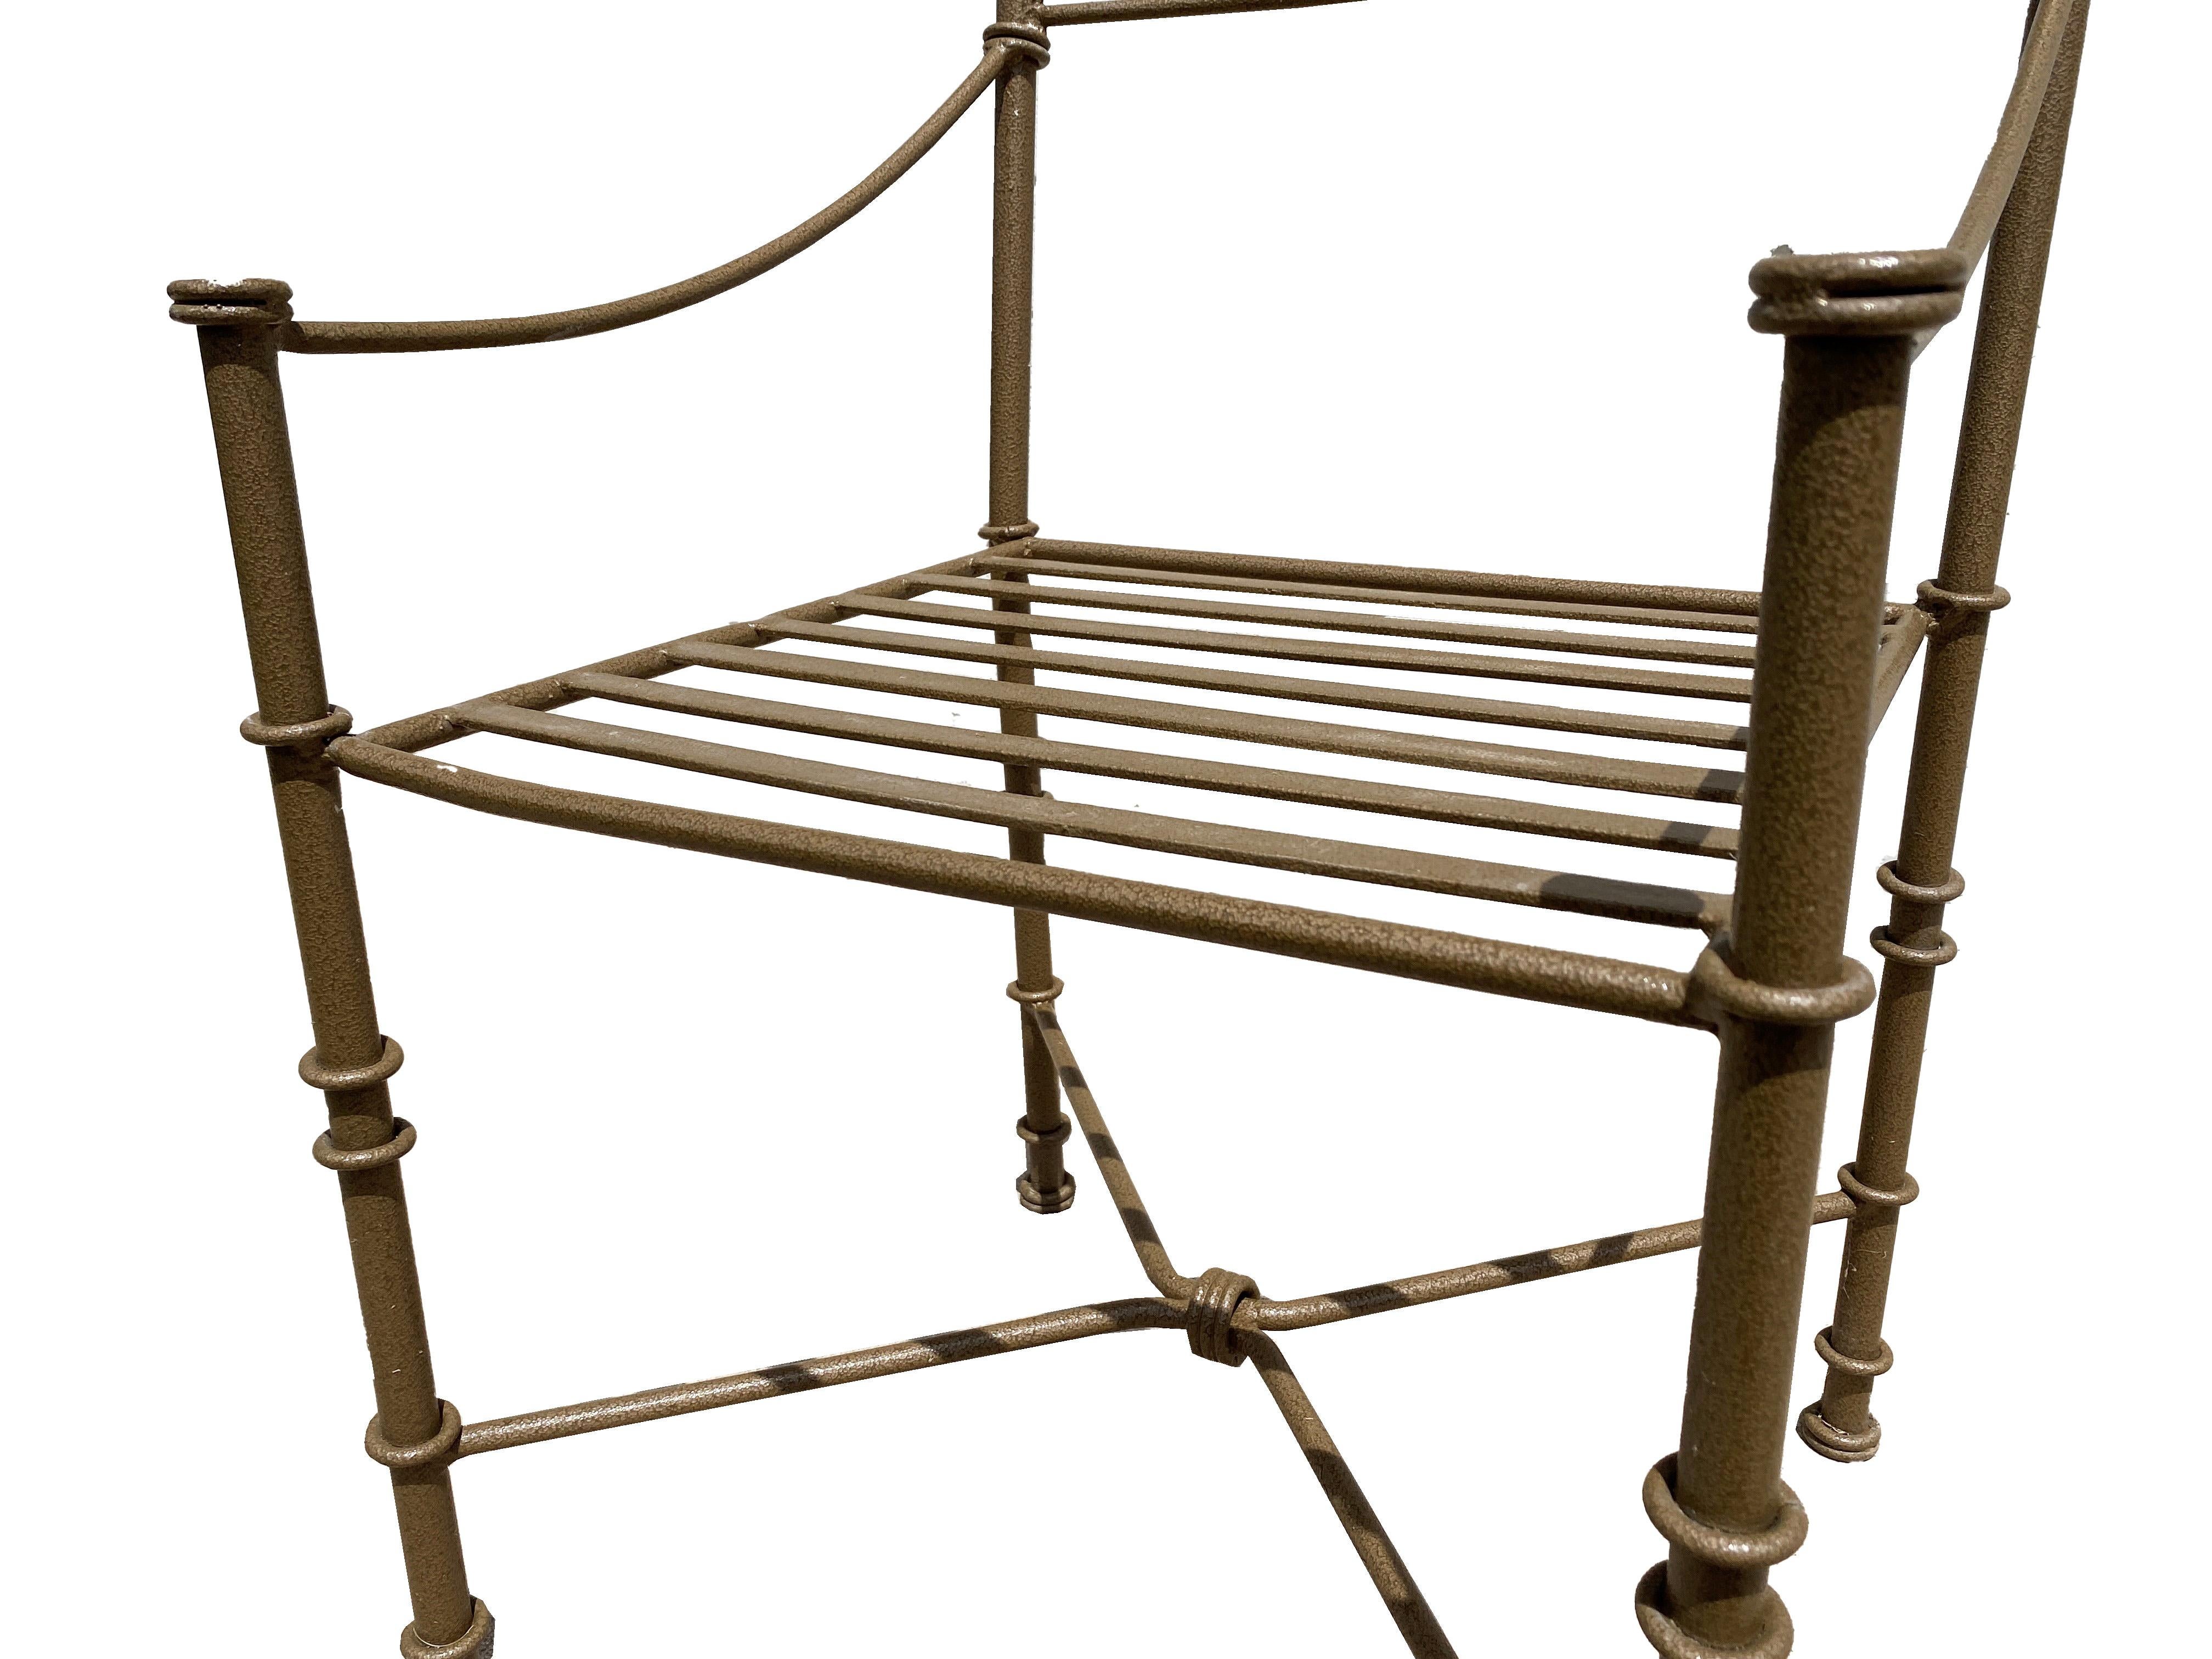 Powder-Coated Giacometti Style Iron Chairs 'Set of 2'